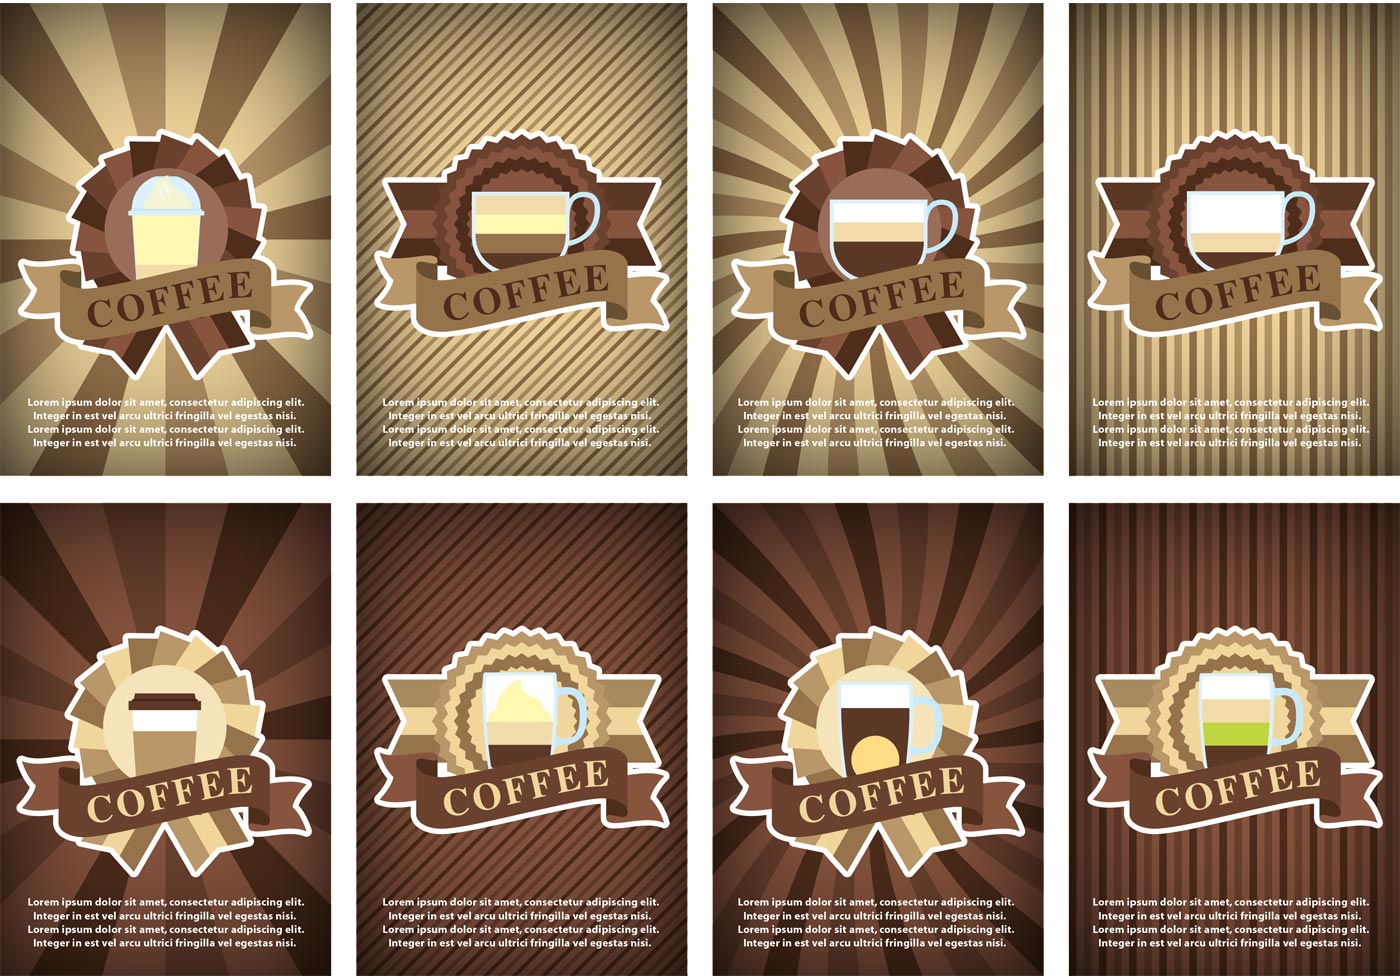 Coffee Poster Vectors - Download Free Vector Art, Stock Graphics & Images